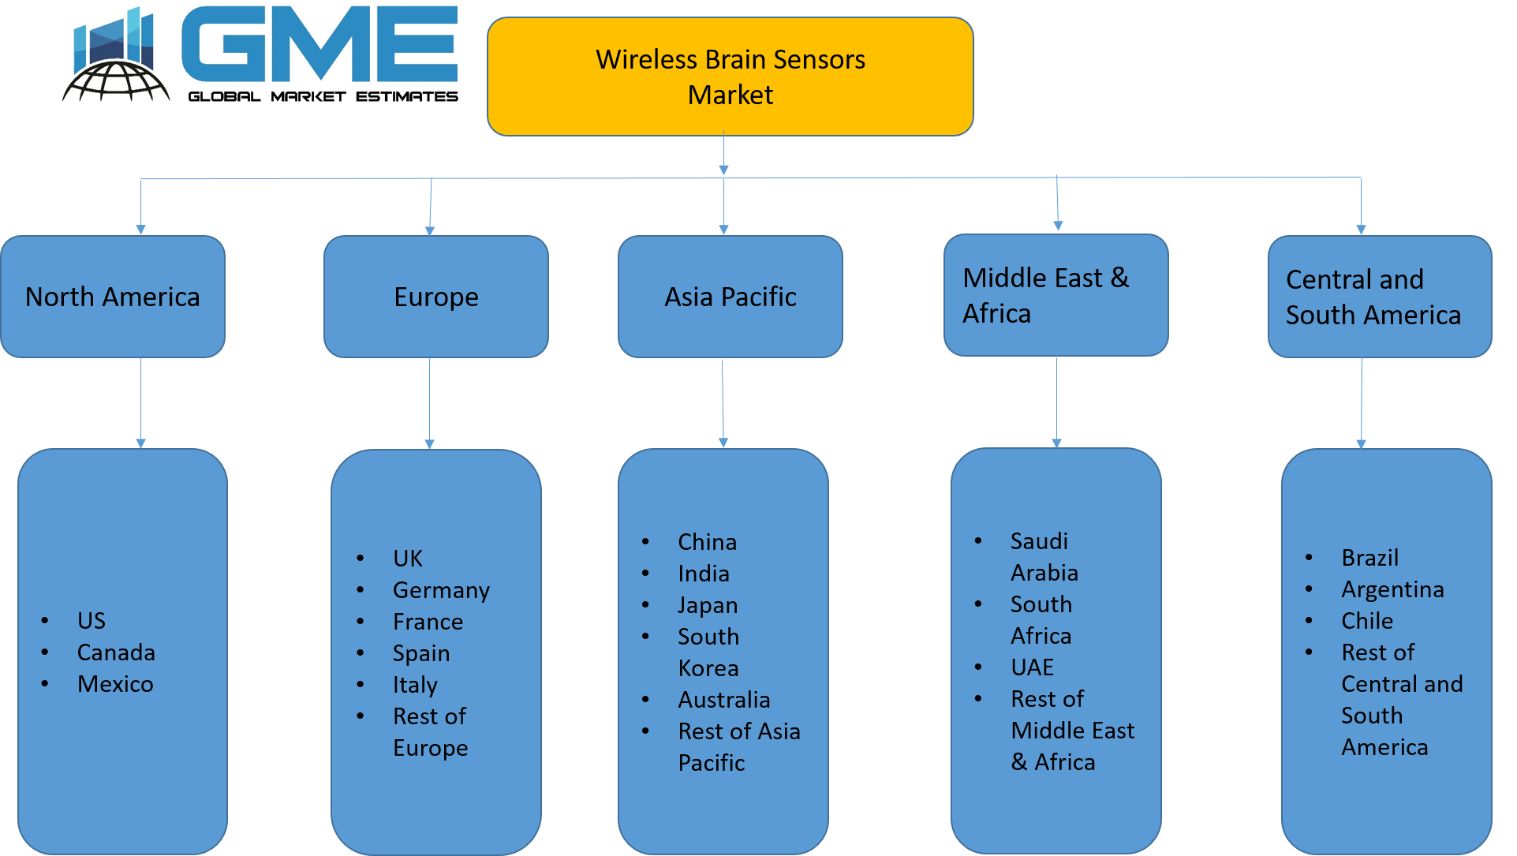 Wireless Brain Sensors Market - Regional Analysis